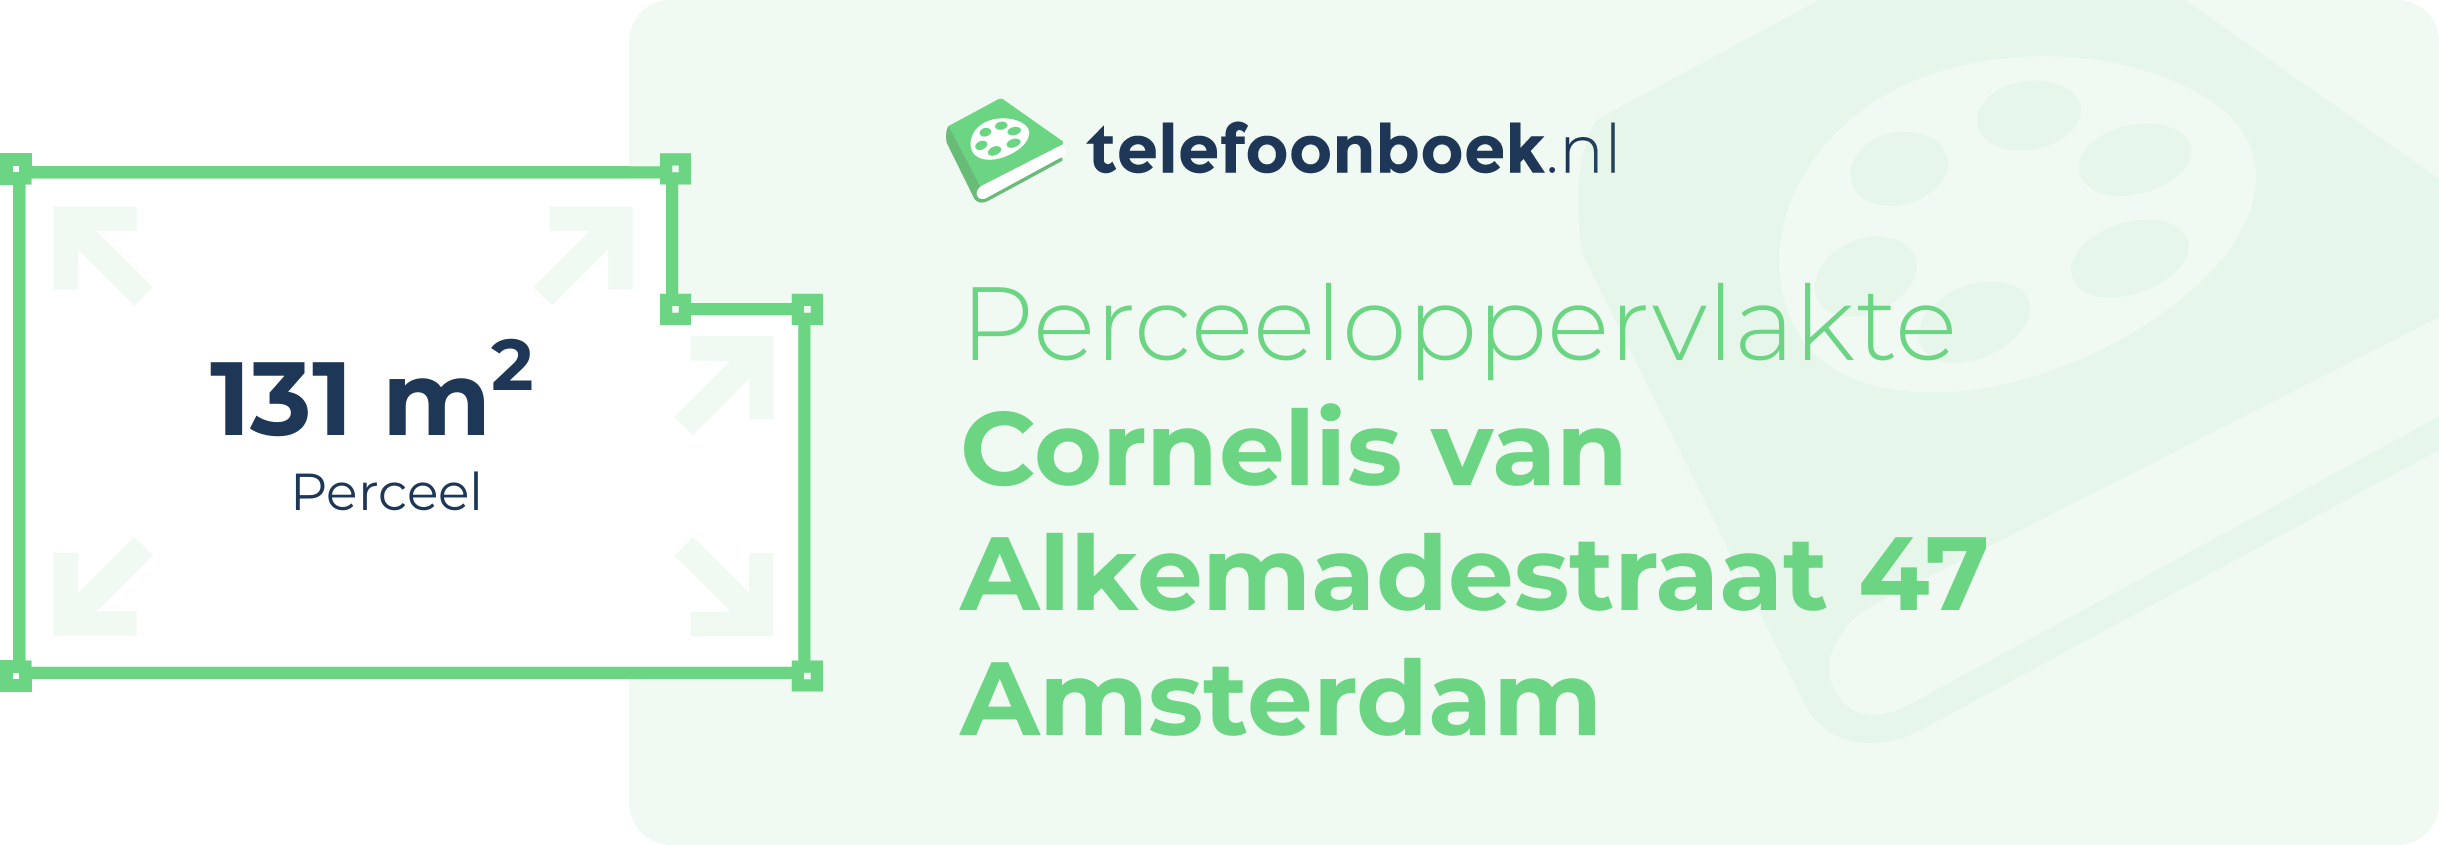 Perceeloppervlakte Cornelis Van Alkemadestraat 47 Amsterdam